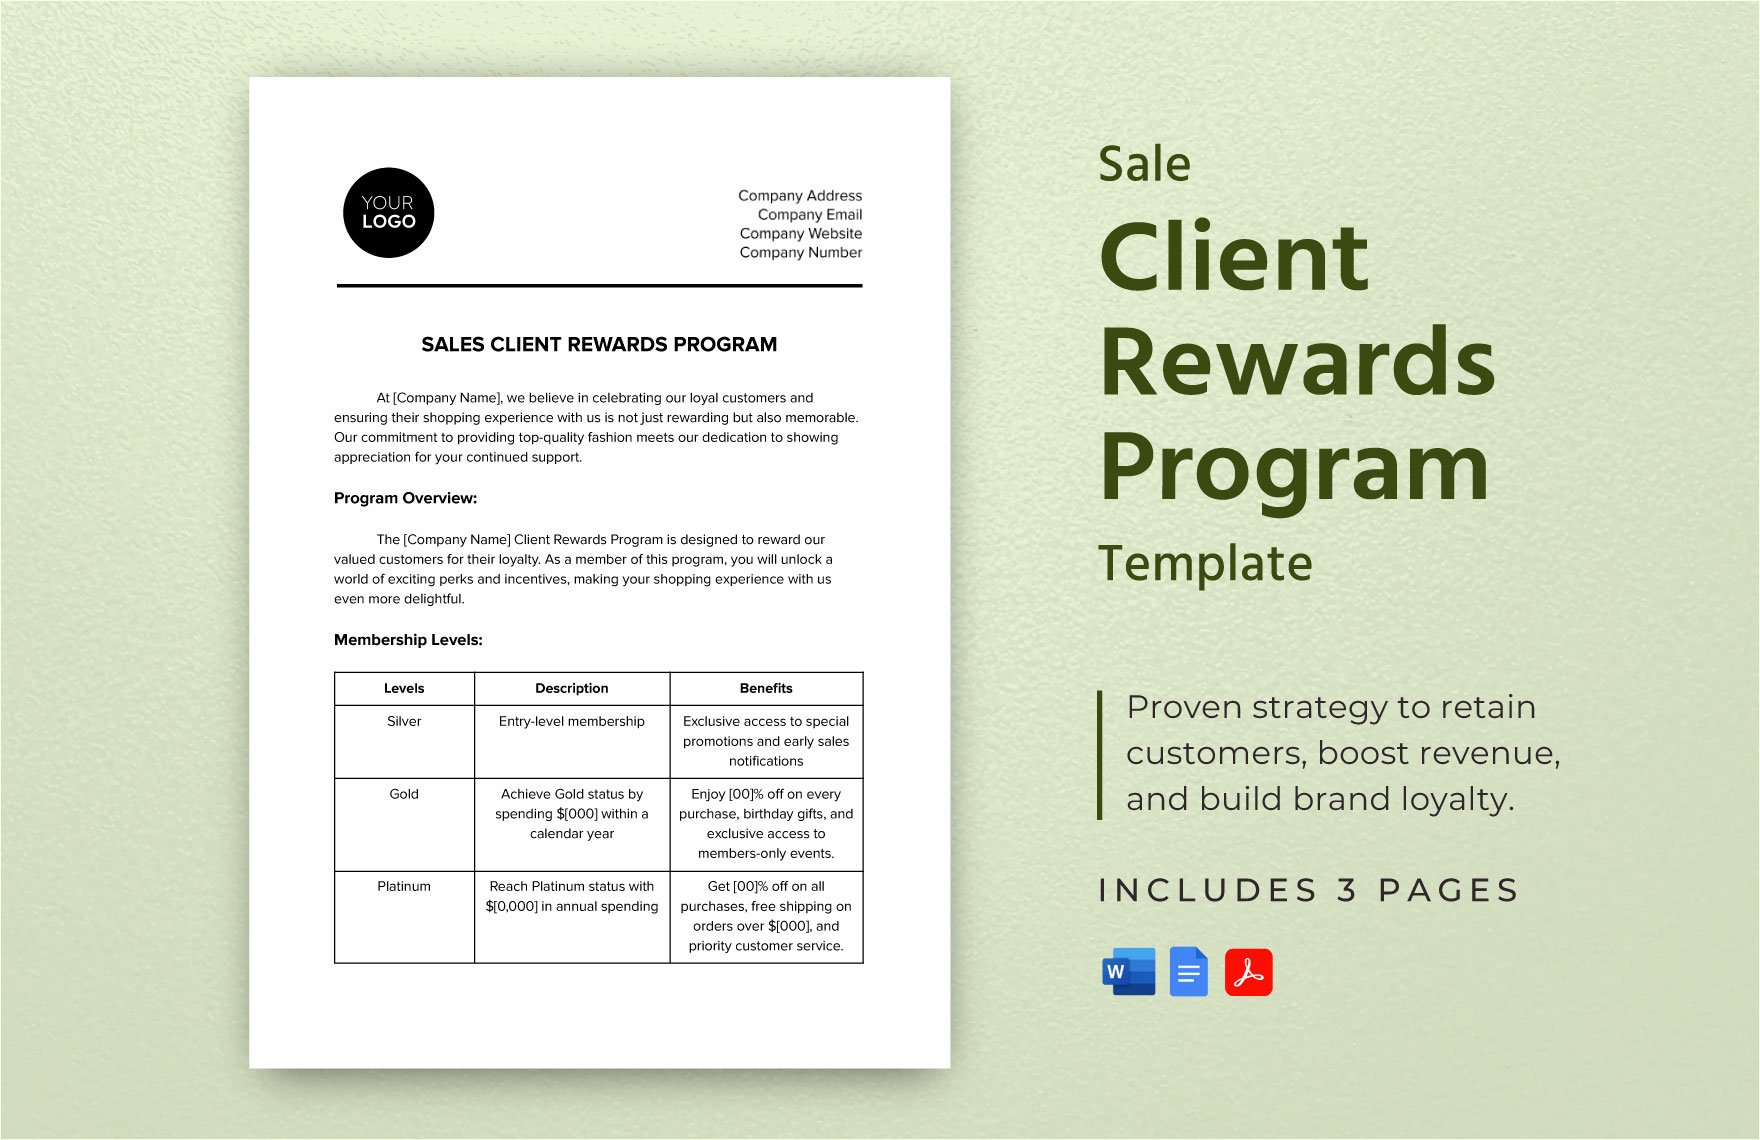 Sales Client Rewards Program Template in Word, Google Docs, PDF